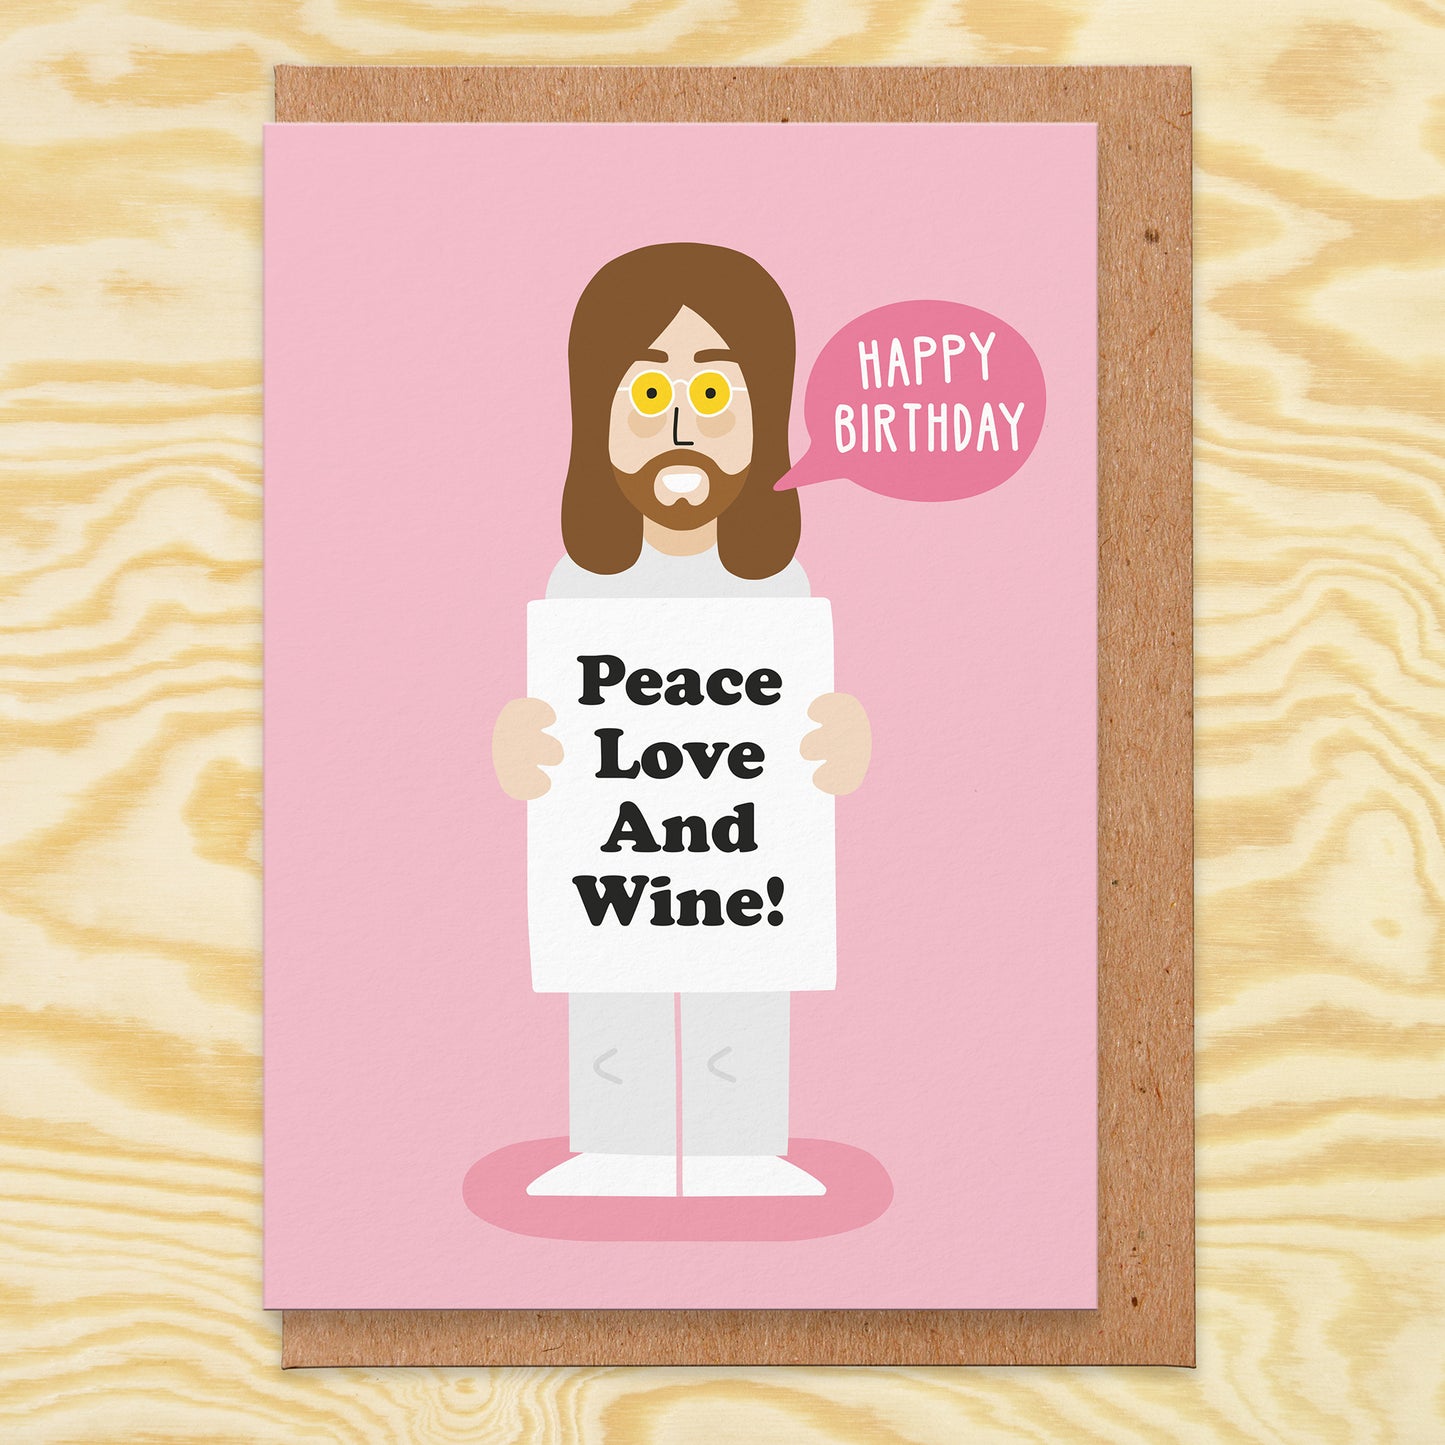 Peace, Love and Wine - Birthday Card